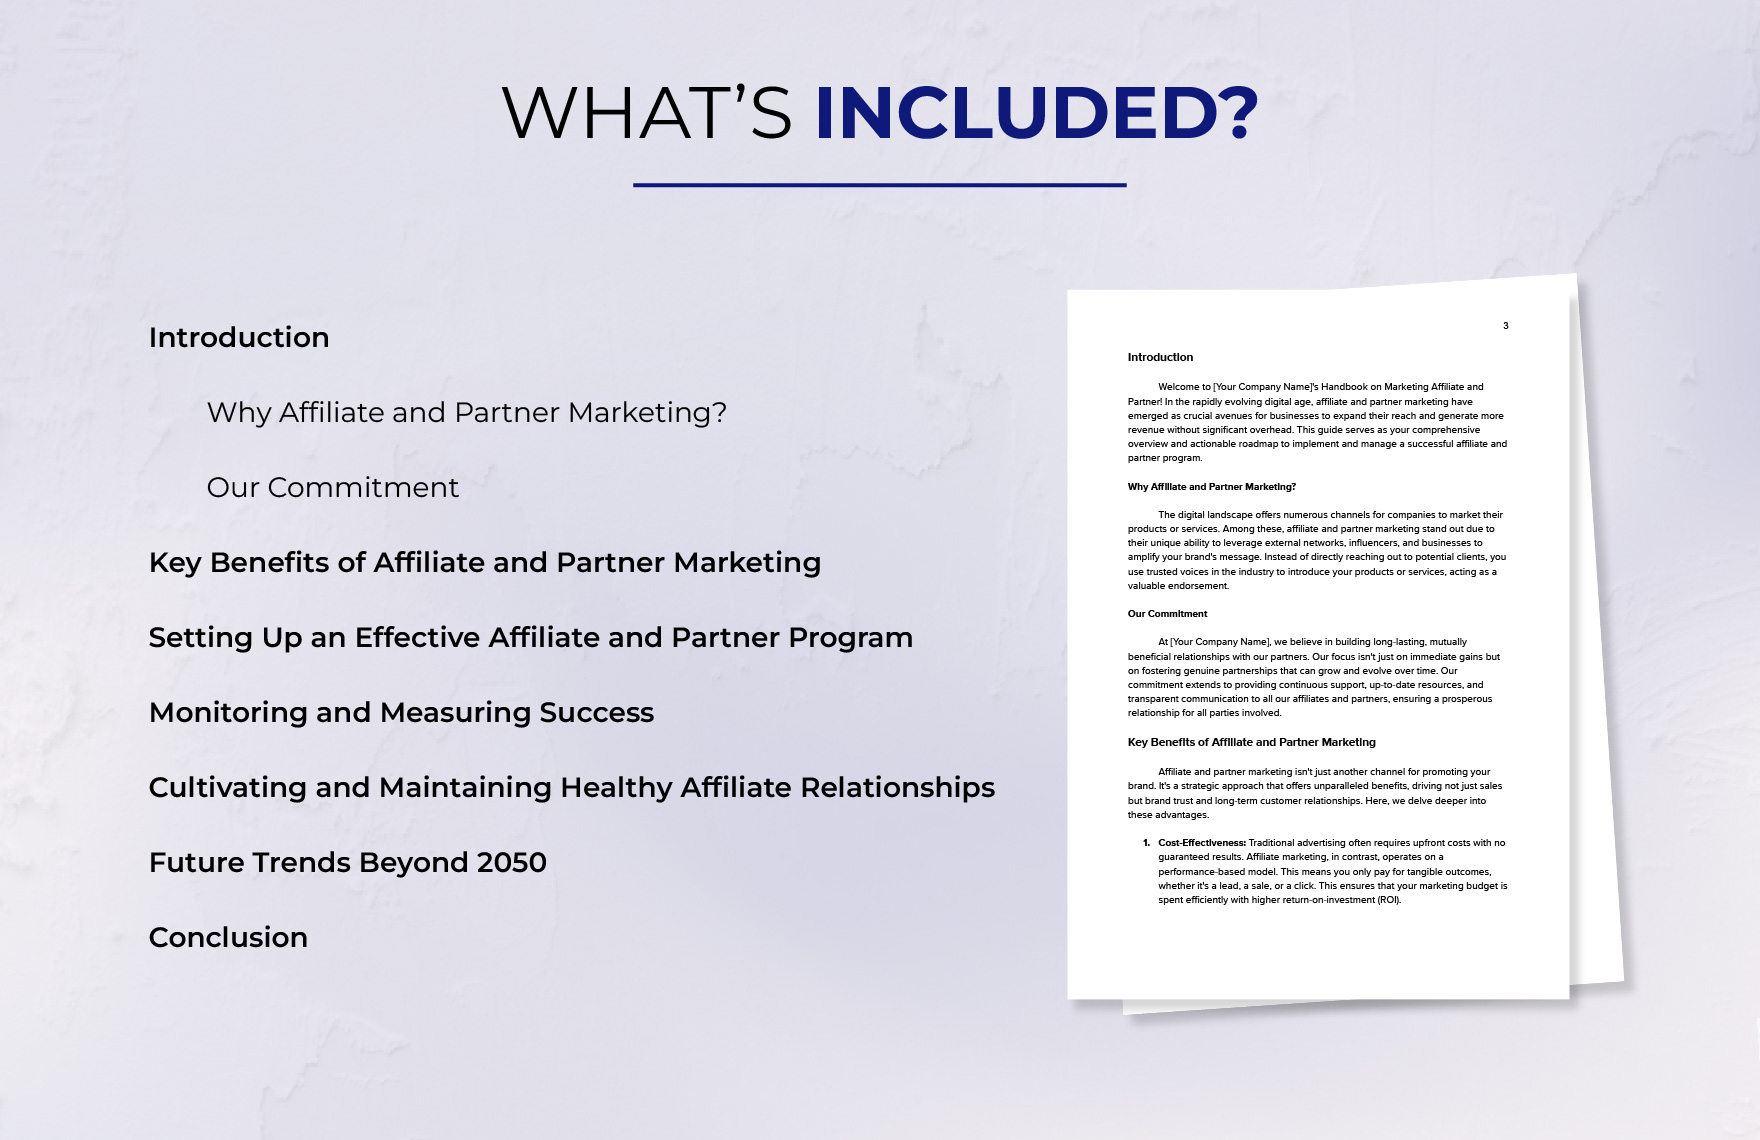 Marketing Affiliate & Partner Handbook Template